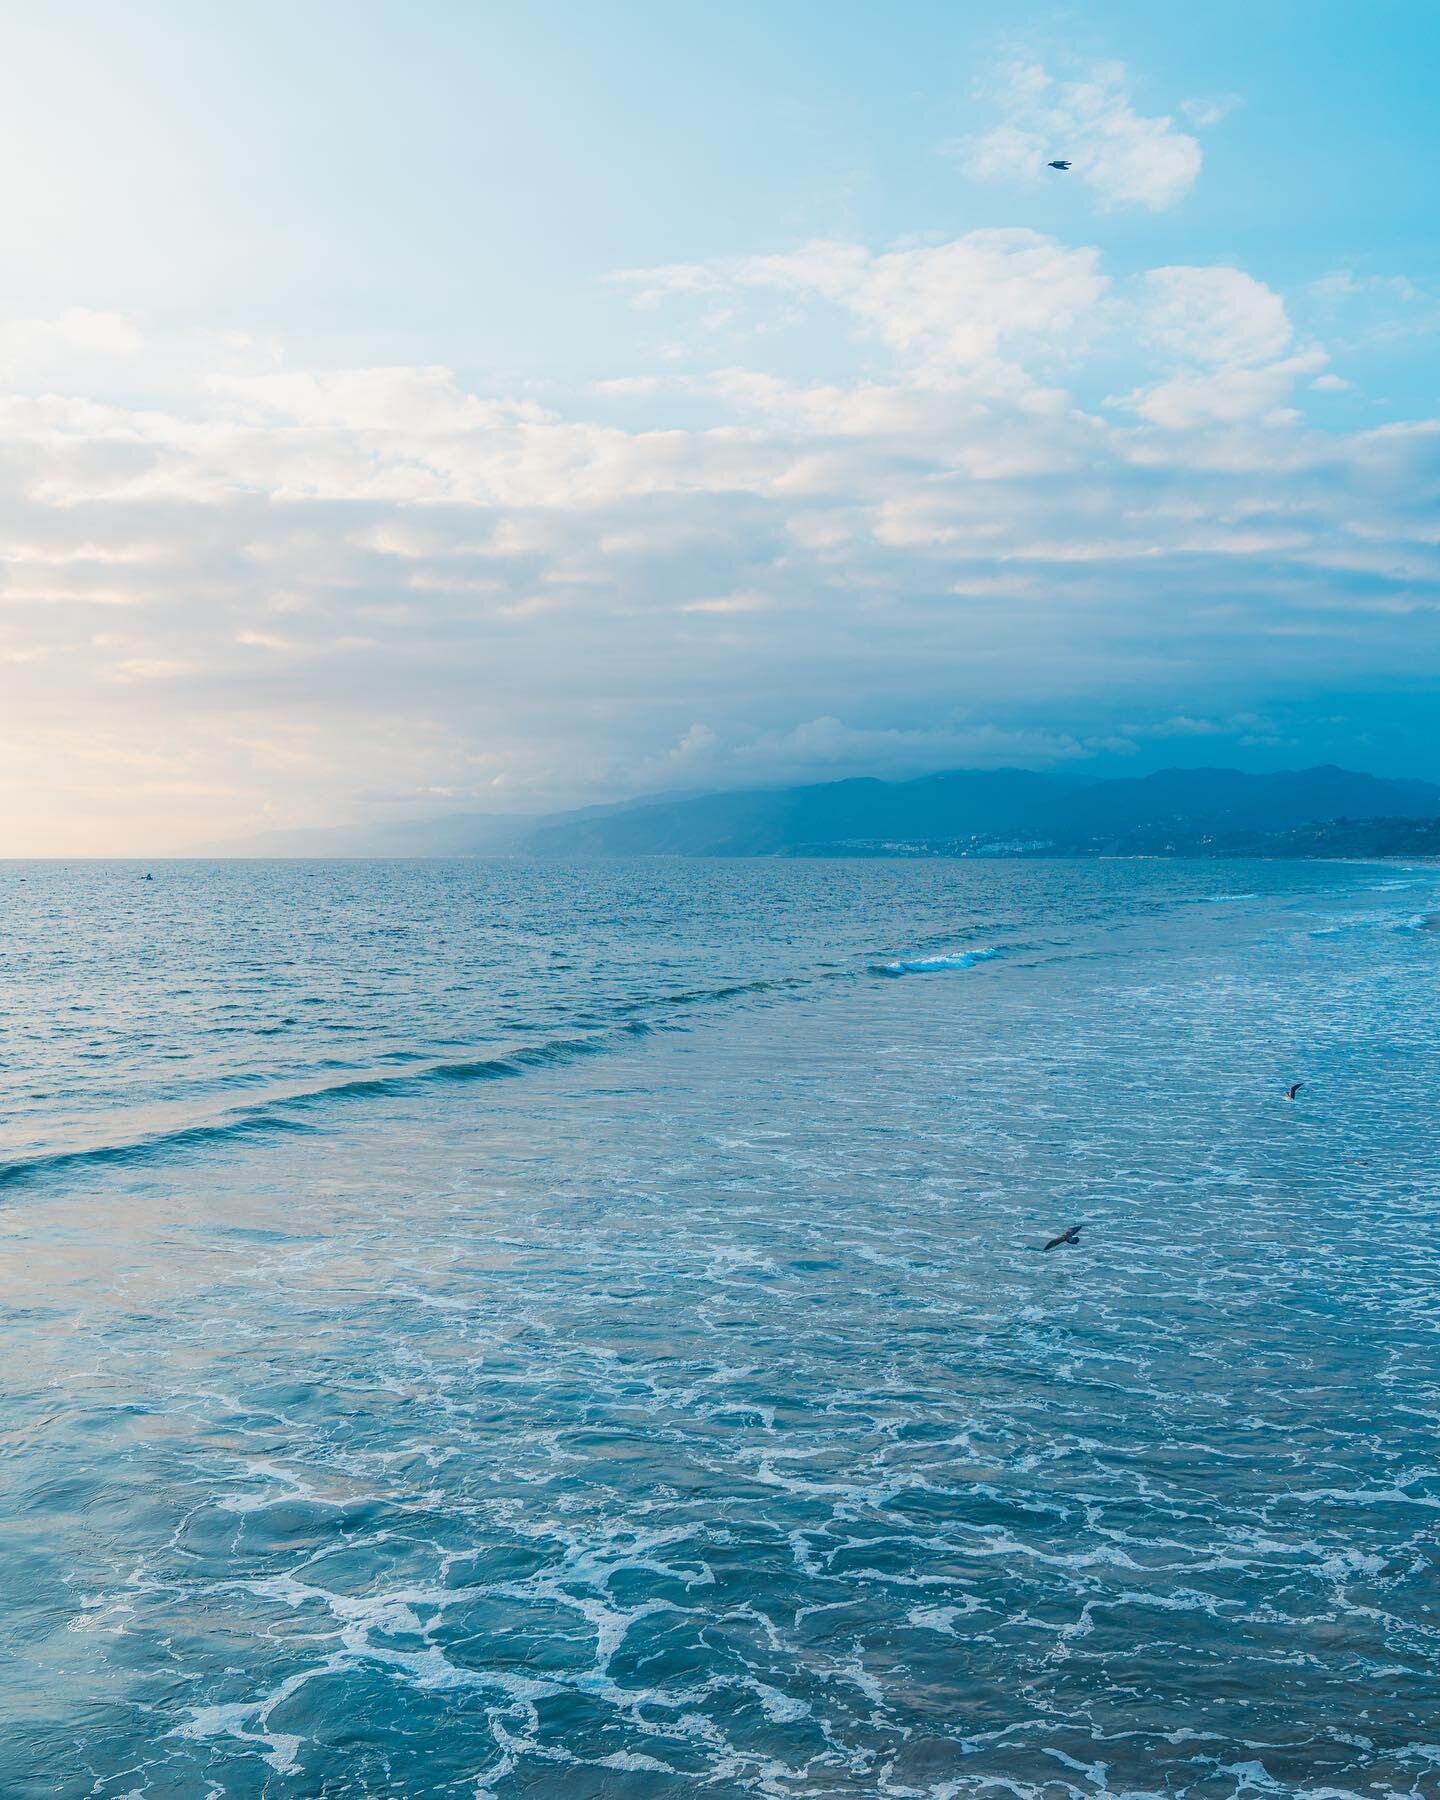 Beach evening in Santa Monica.

Camera: Sony A7R III
Lens: Sony 24-70mm f/2.8

#beachphotography 
#santamonica 
#sunsetphotography 
#travelphotography 
#losangeles 
#laphotographer 
#landscapephotographer 
#sunsets
#sonyalpha 
#sonyphotographer